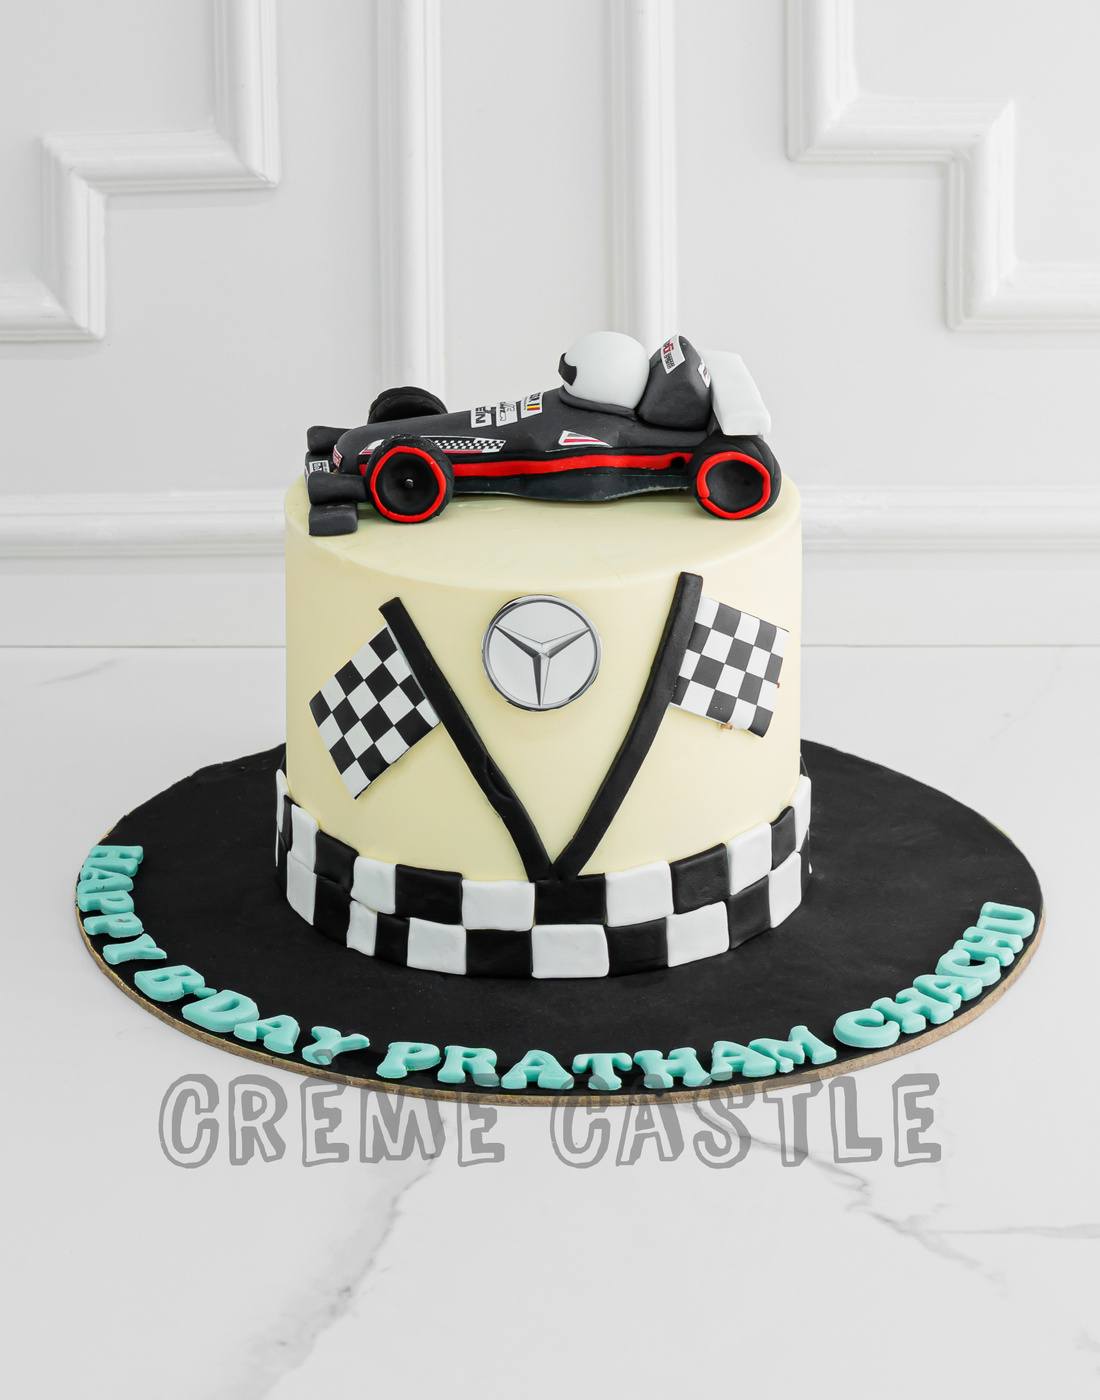 Formula 1 Car Race Cake, A Customize Car Race cake